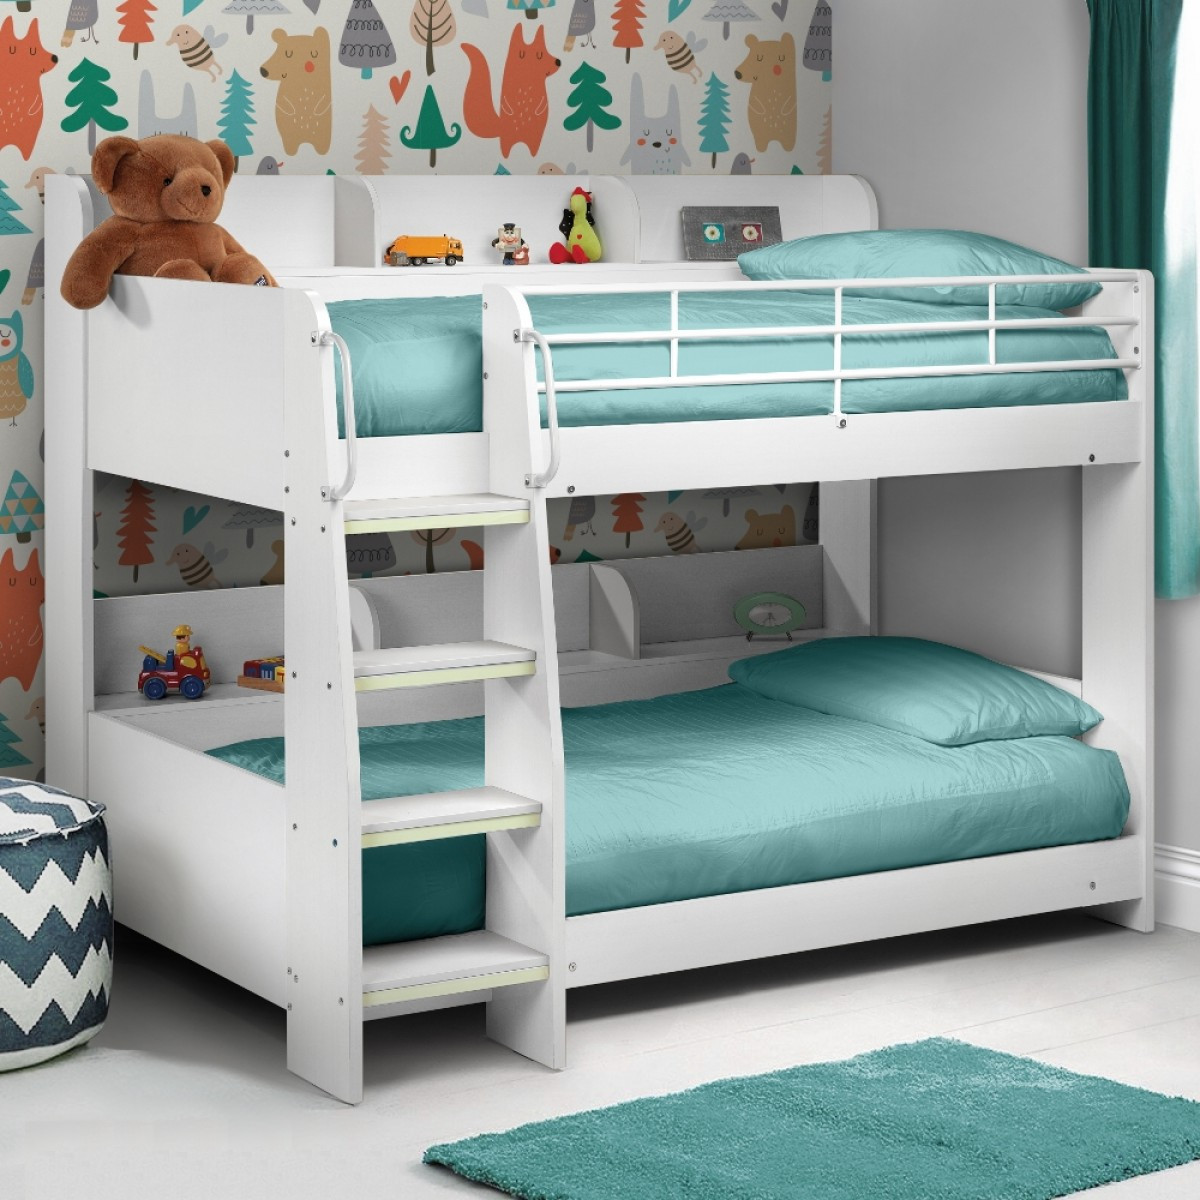 Childrens Loft Bed With Storage
 Julian Bowen Domino White Wooden Kids Bunk Bed